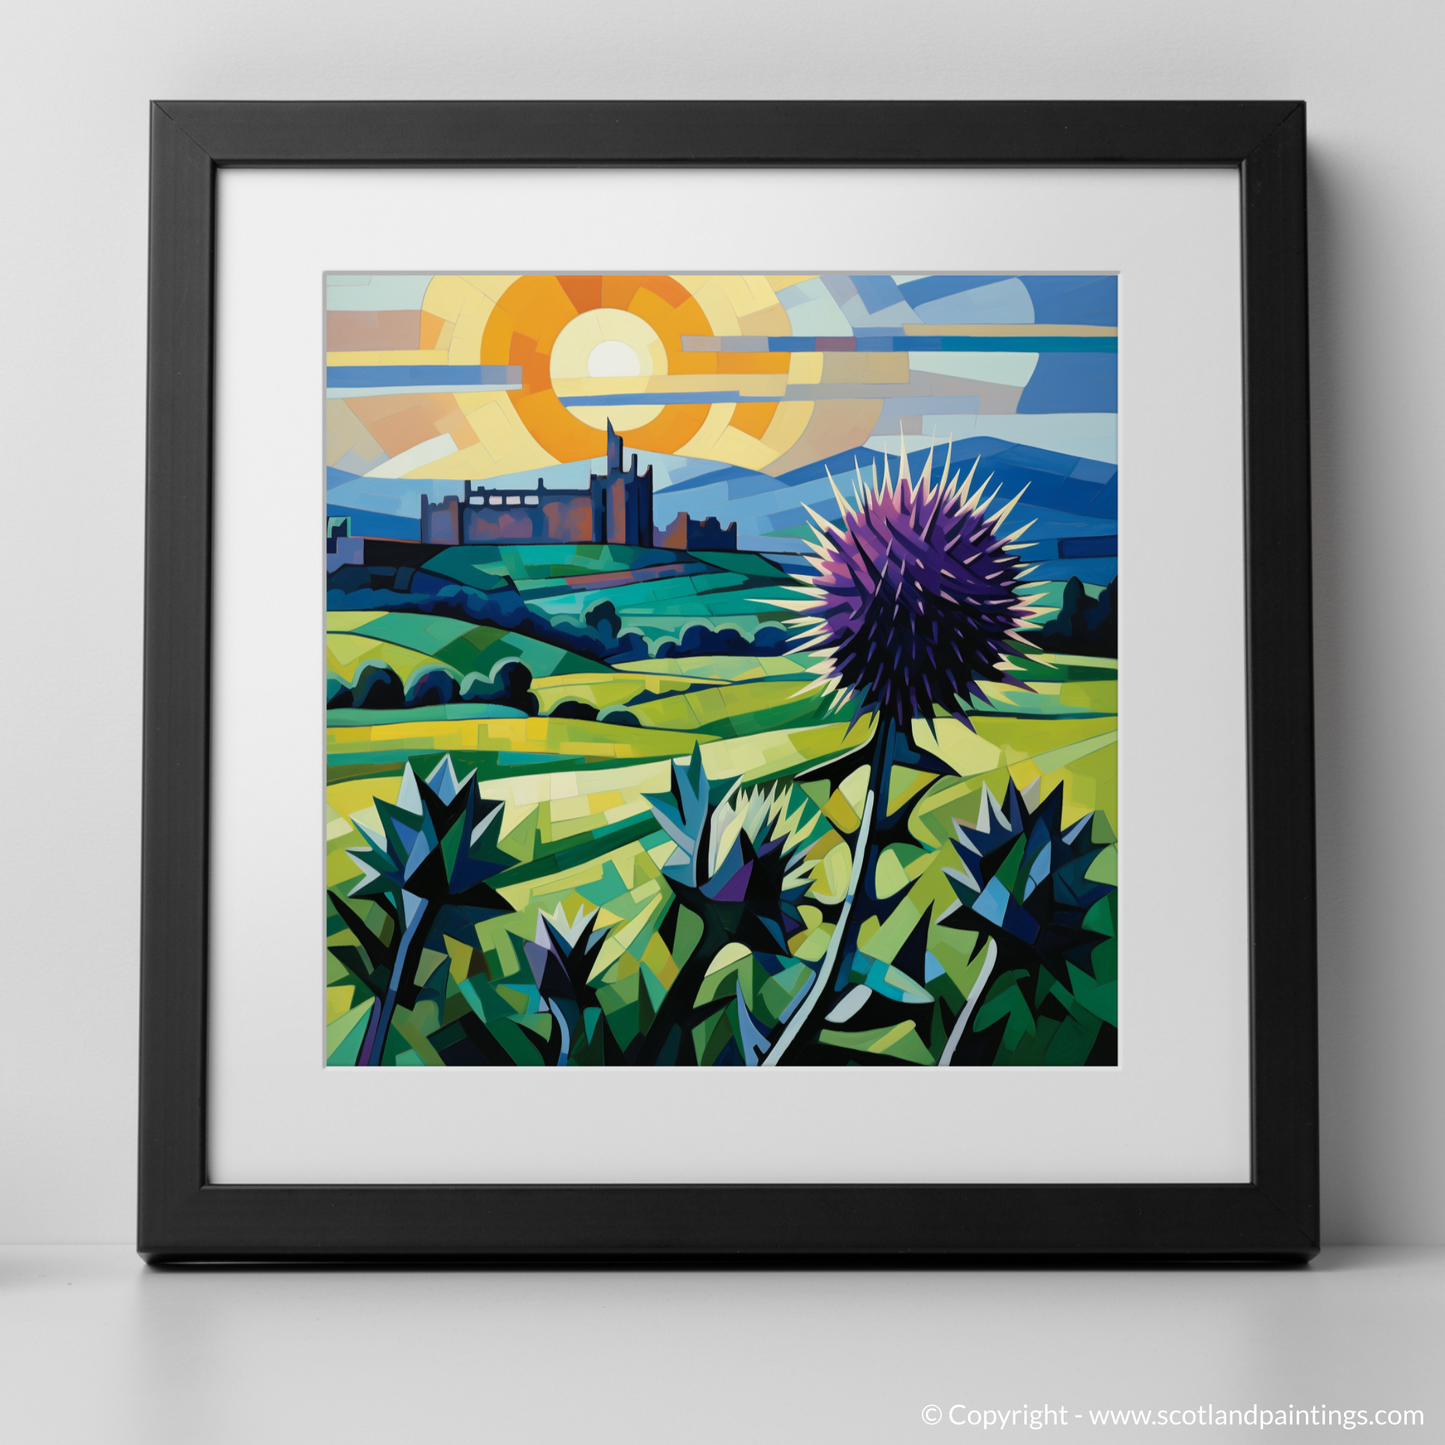 Cubist Thistle and Stirling Castle: A Scottish Landscape Reimagined